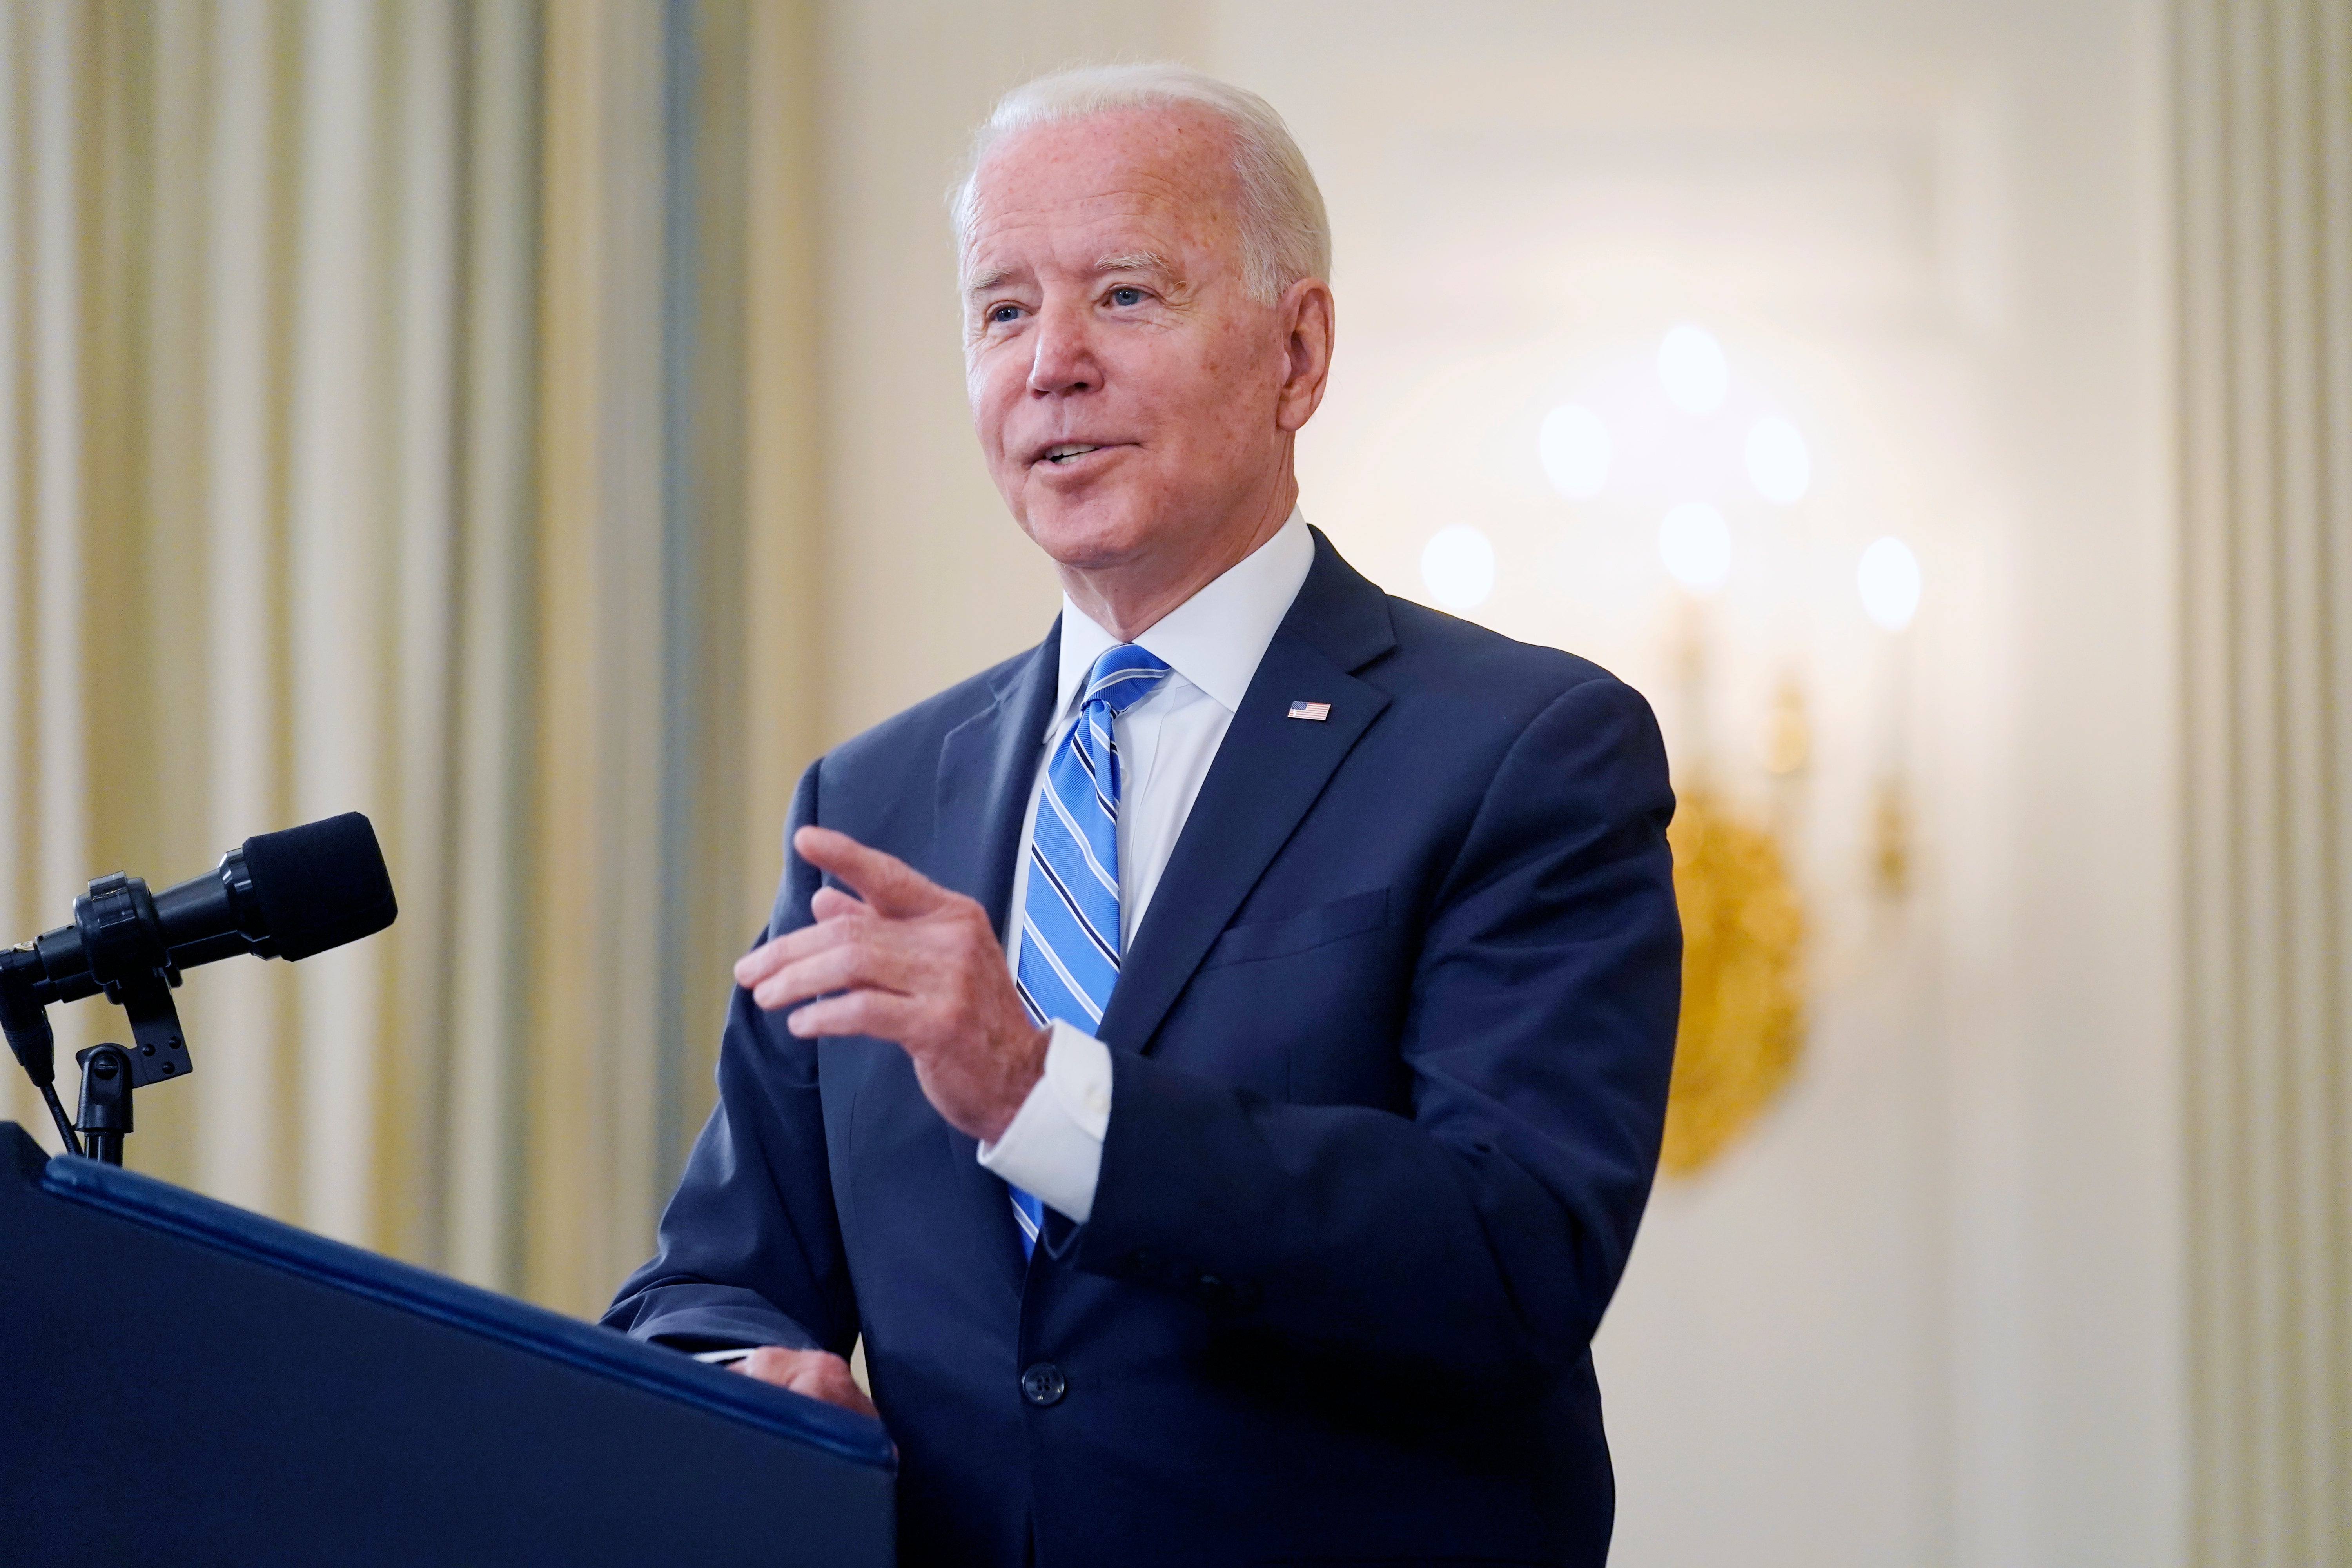 The policies of Joe Biden have been in marked contrast to his predecessor Donald Trump